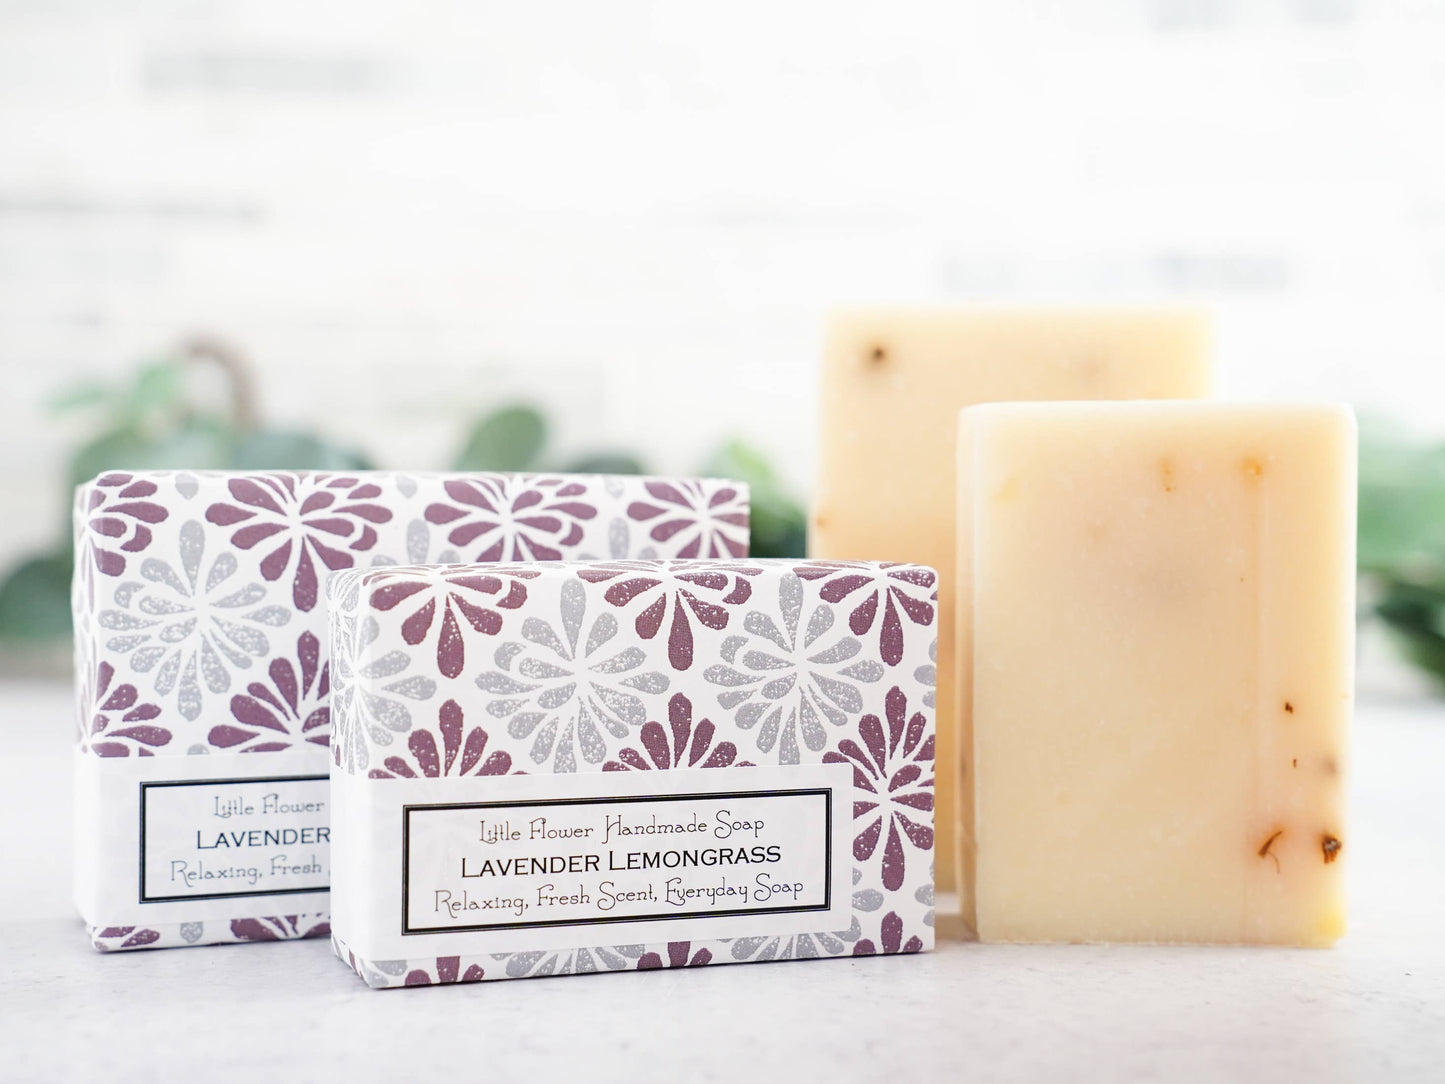 Lavender Lemongrass Handmade Soap: 6 oz